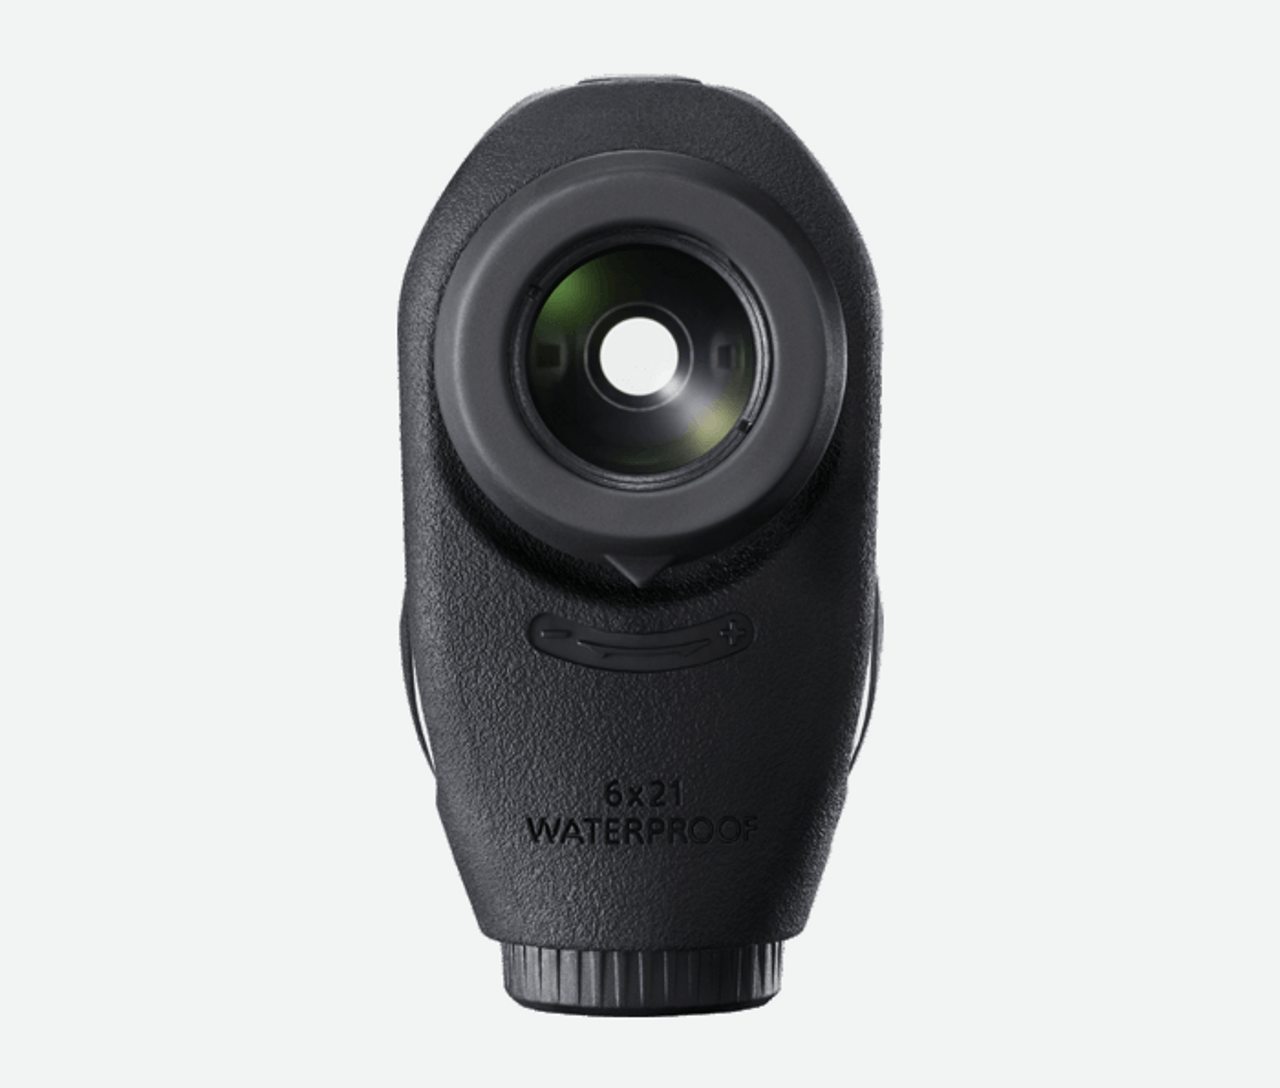 Nikon Coolshot Pro II Stabilized Rangefinder